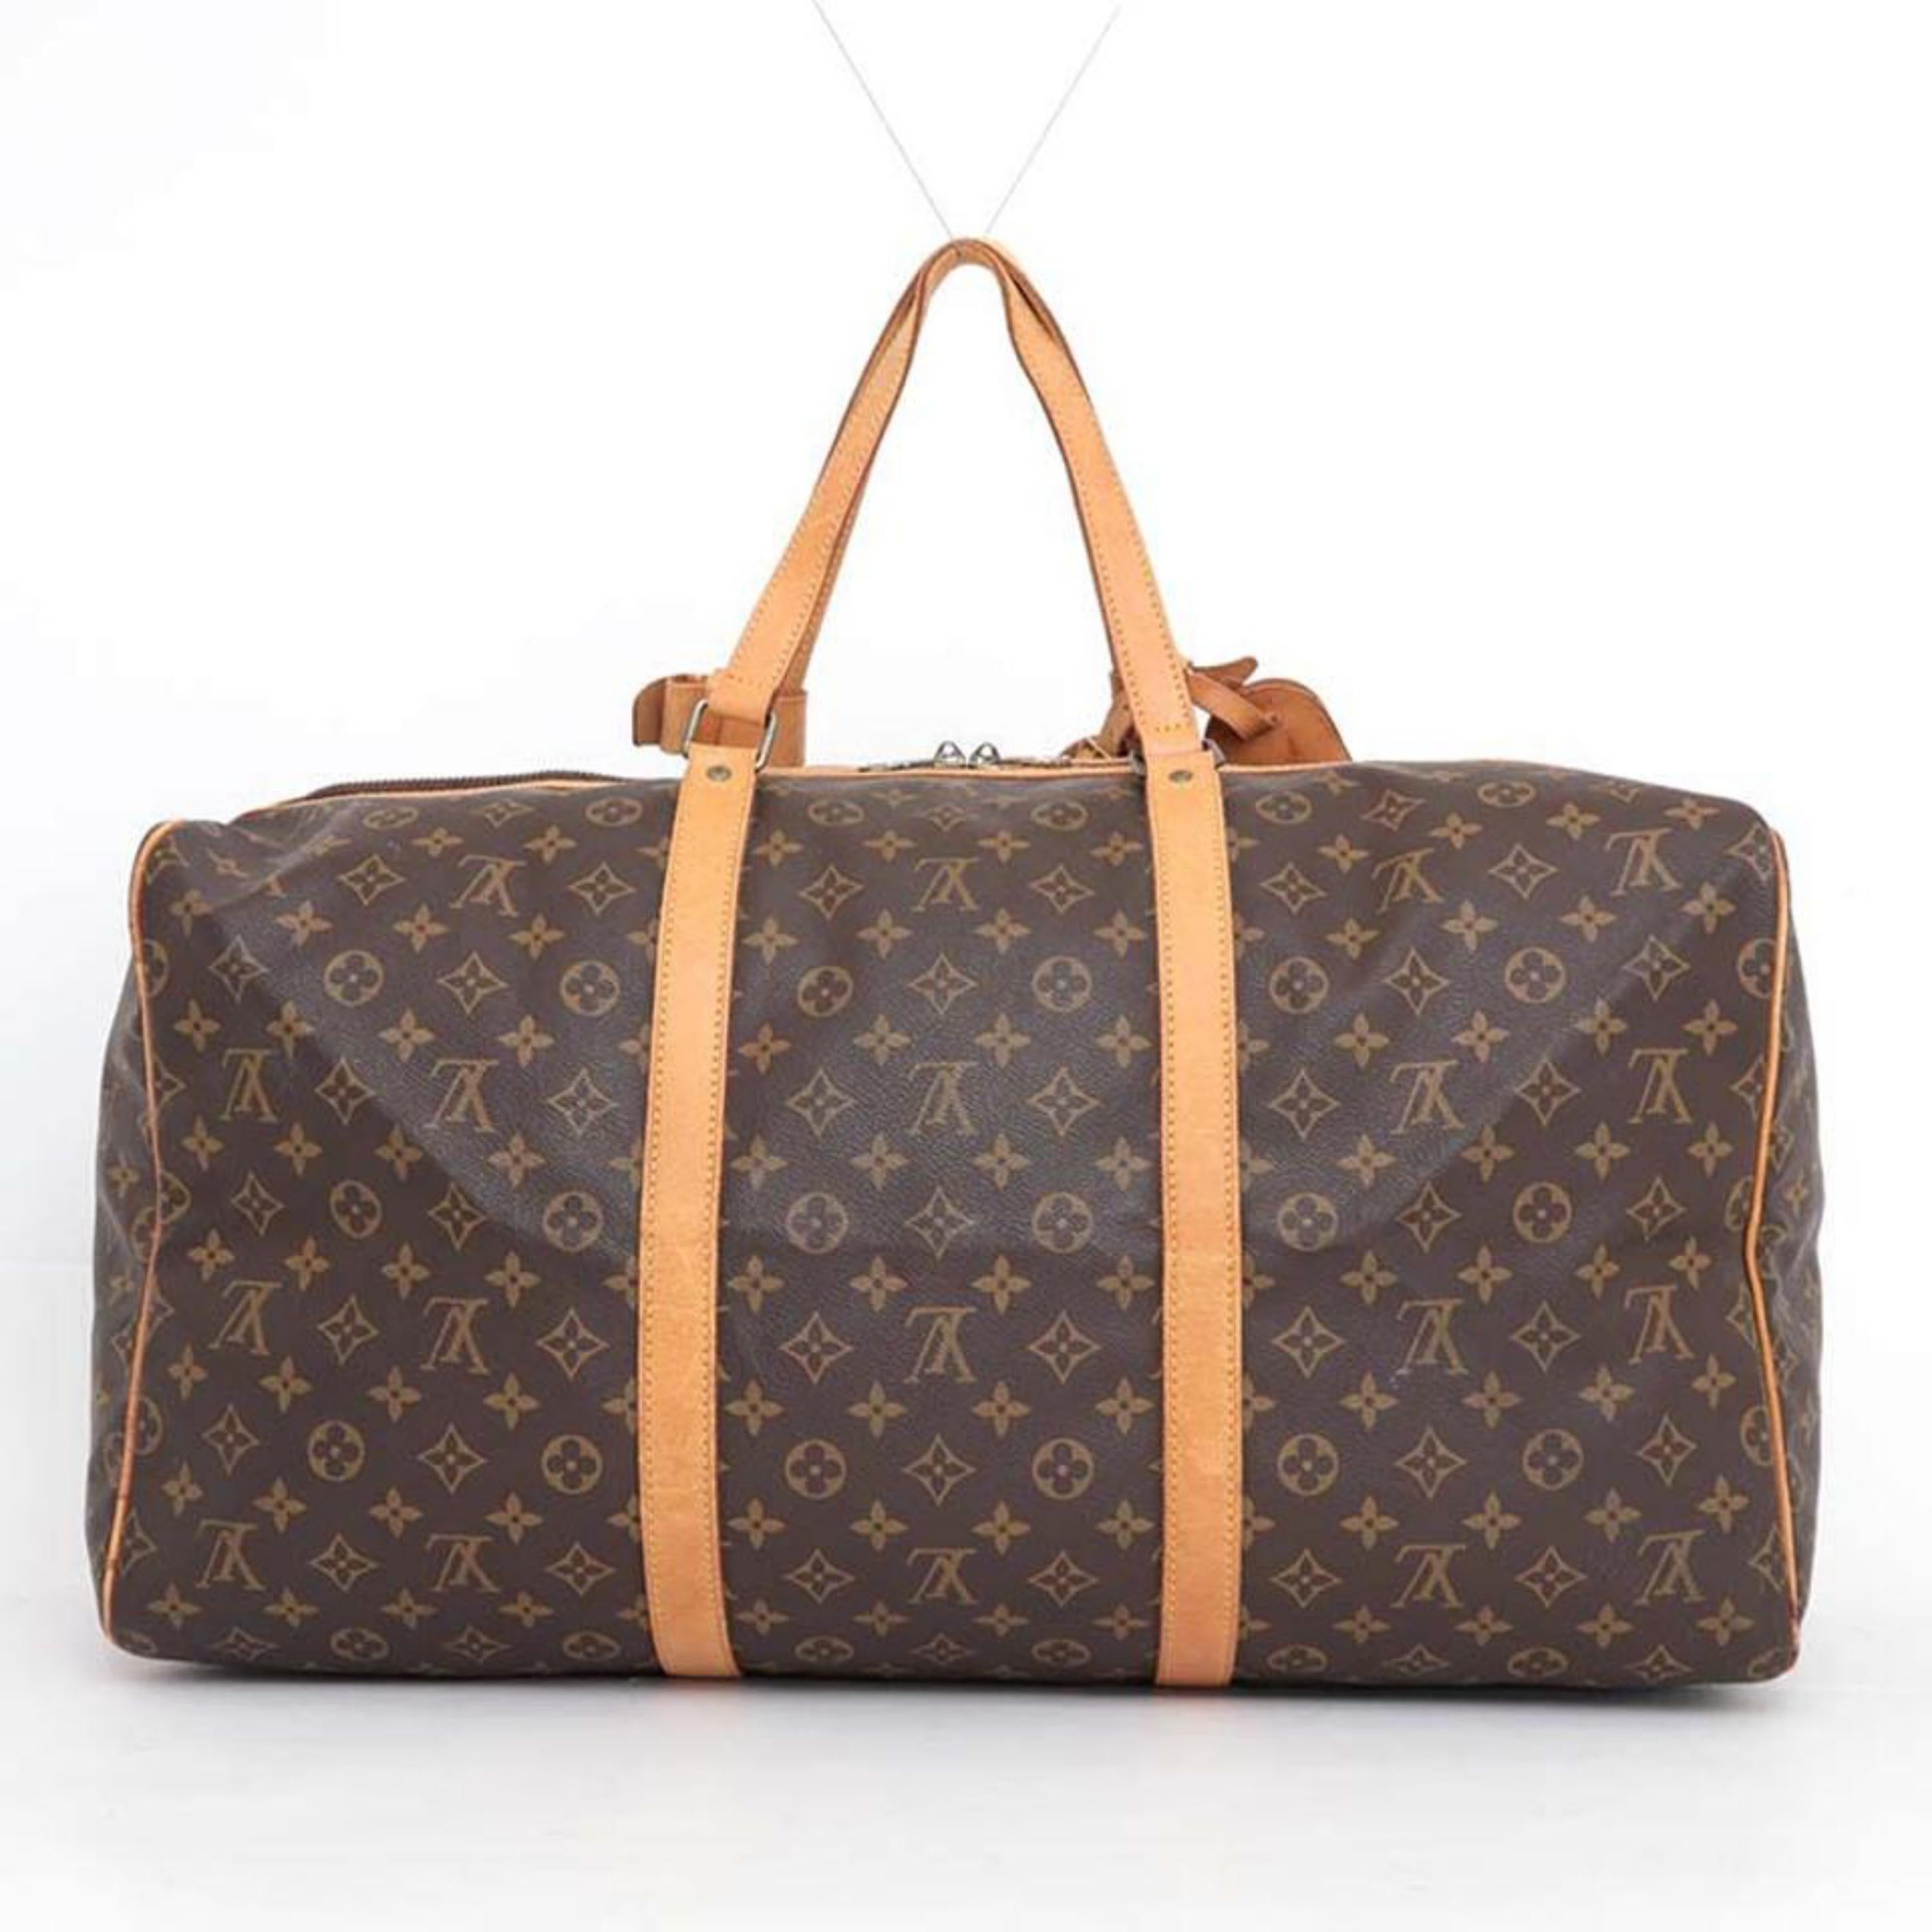 Louis Vuitton Sac Souple Monogram 55 230343 Coated Canvas Weekend/Travel Bag For Sale 2